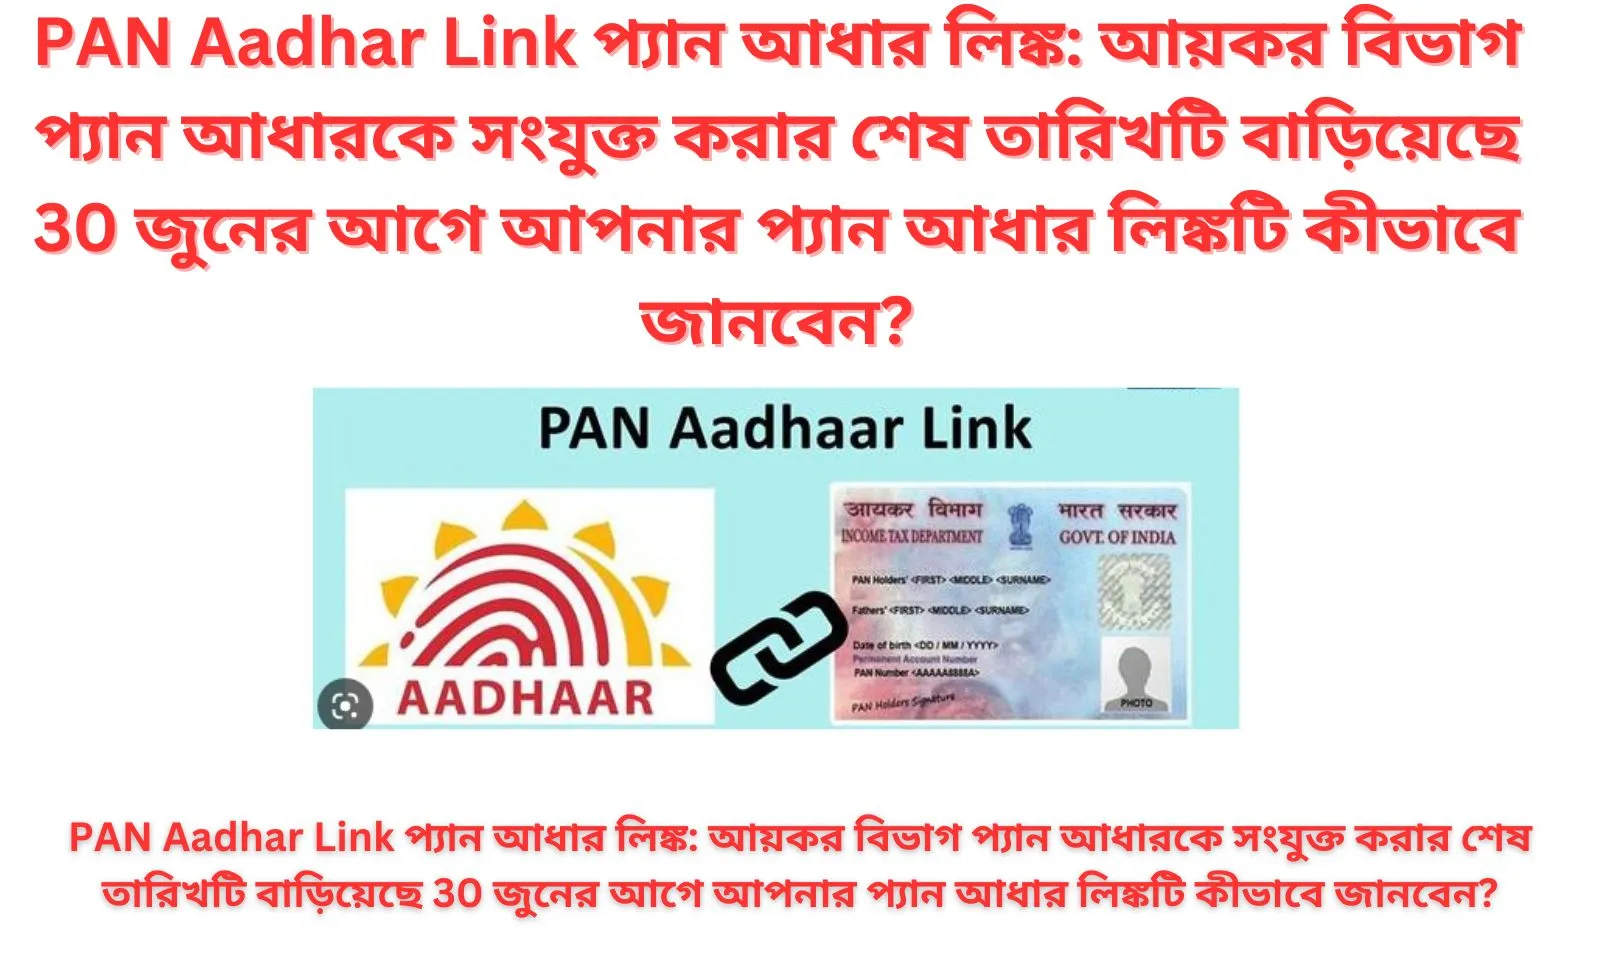 PAN Aadhar Link প্যান আধার লিঙ্ক